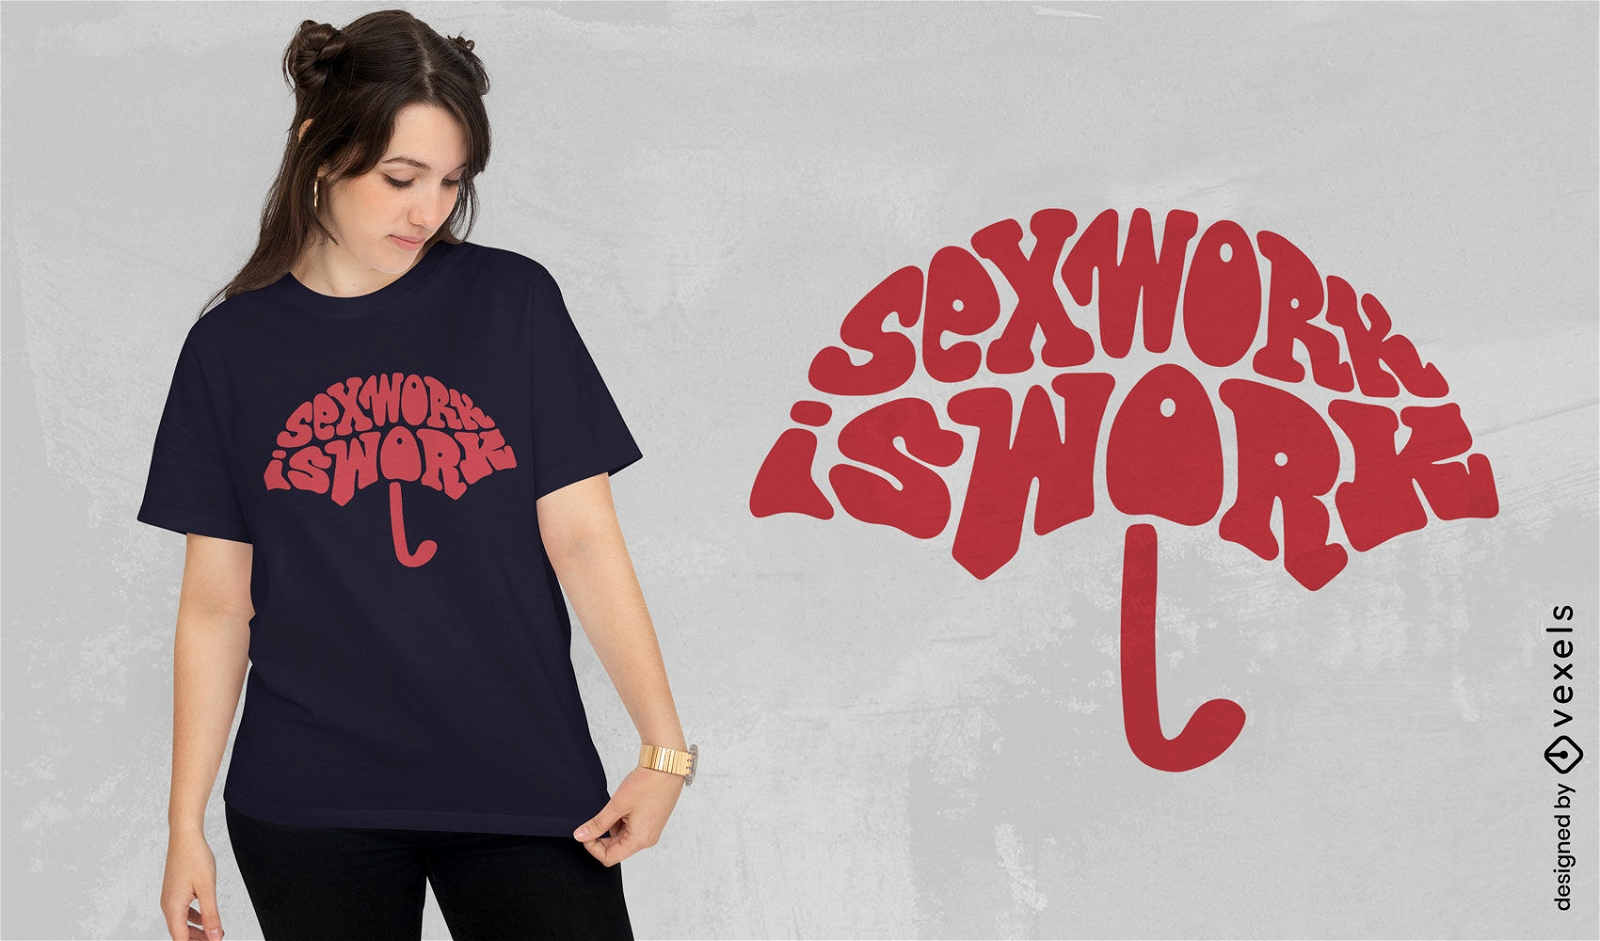 Sexarbeitszitat im Regenschirm-T-Shirt-Design